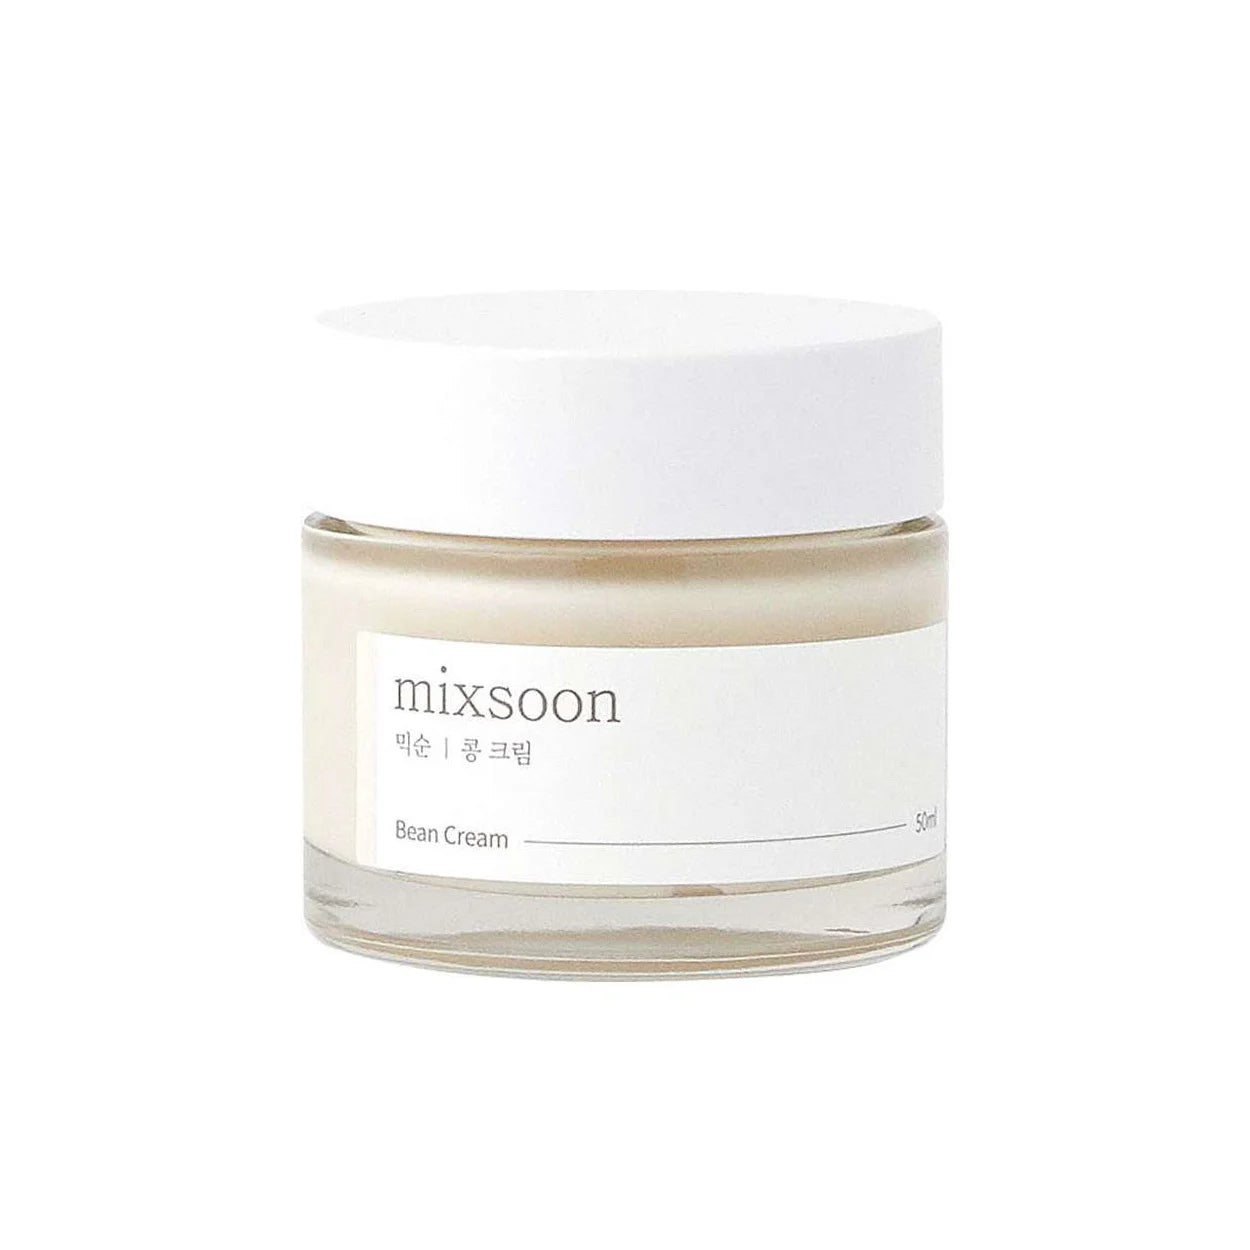 Mixsoon Bean Cream best Korean face moisturizer day night cream for oily combination sensitive acne prone skin lightweight gentle skincare K Beauty World